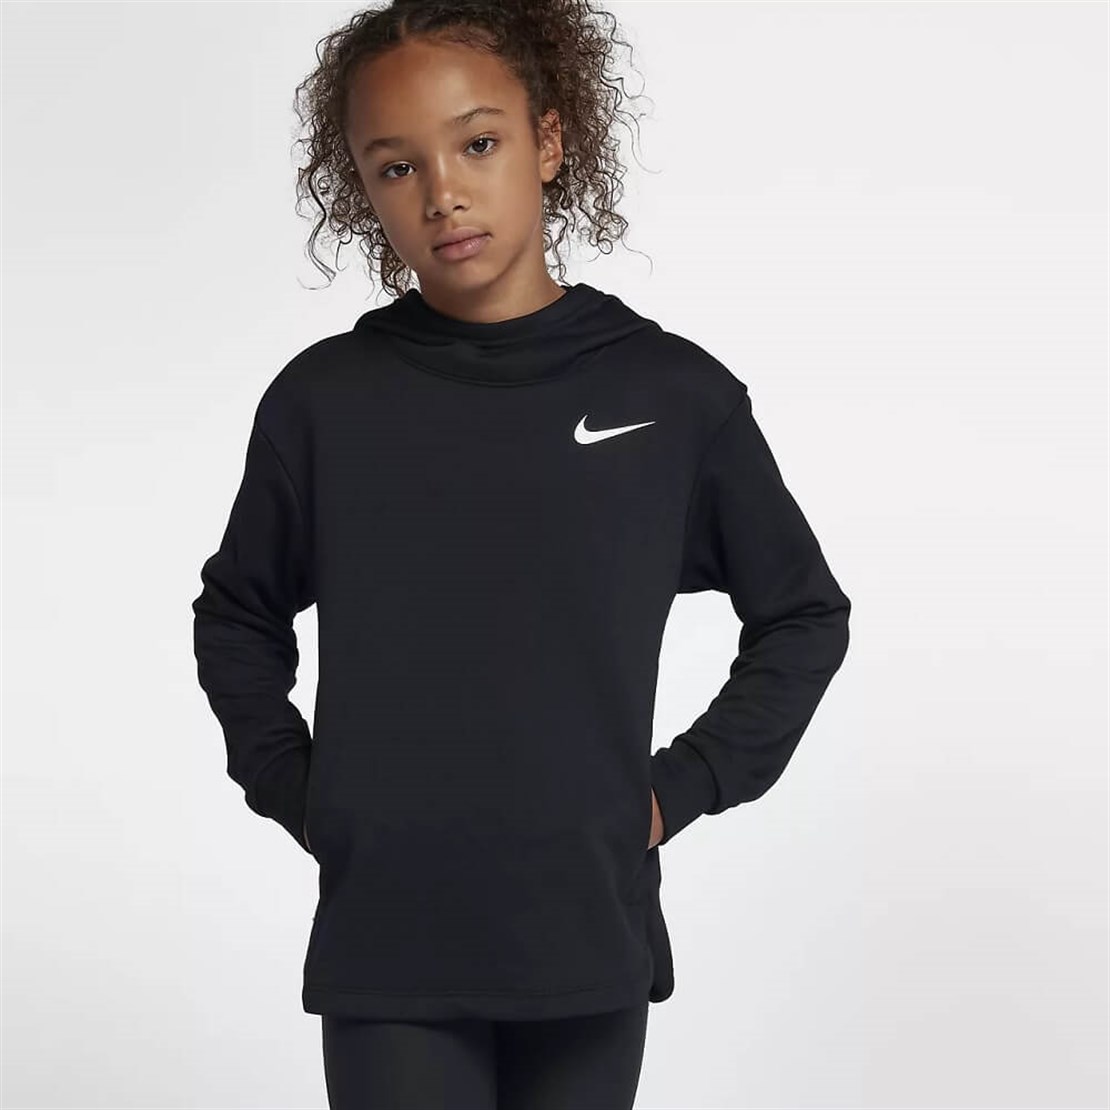 Nike Pro Kız Çocuk Sweatshirt